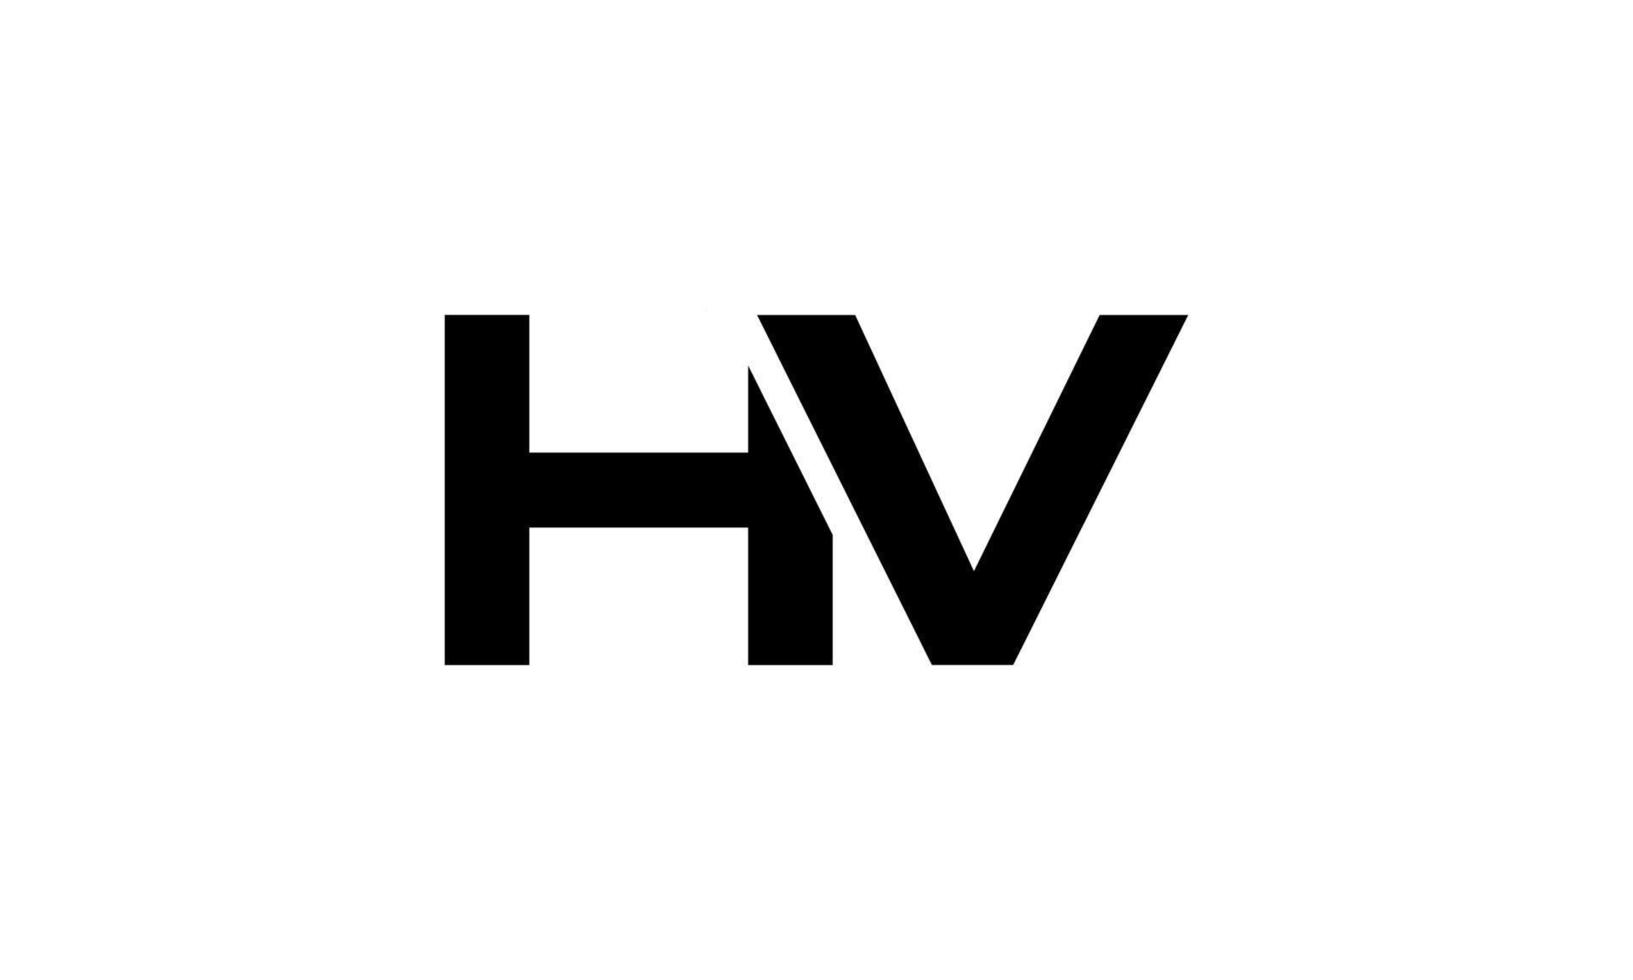 hv logo ontwerp. eerste hv brief logo ontwerp monogram vector ontwerp pro vector.